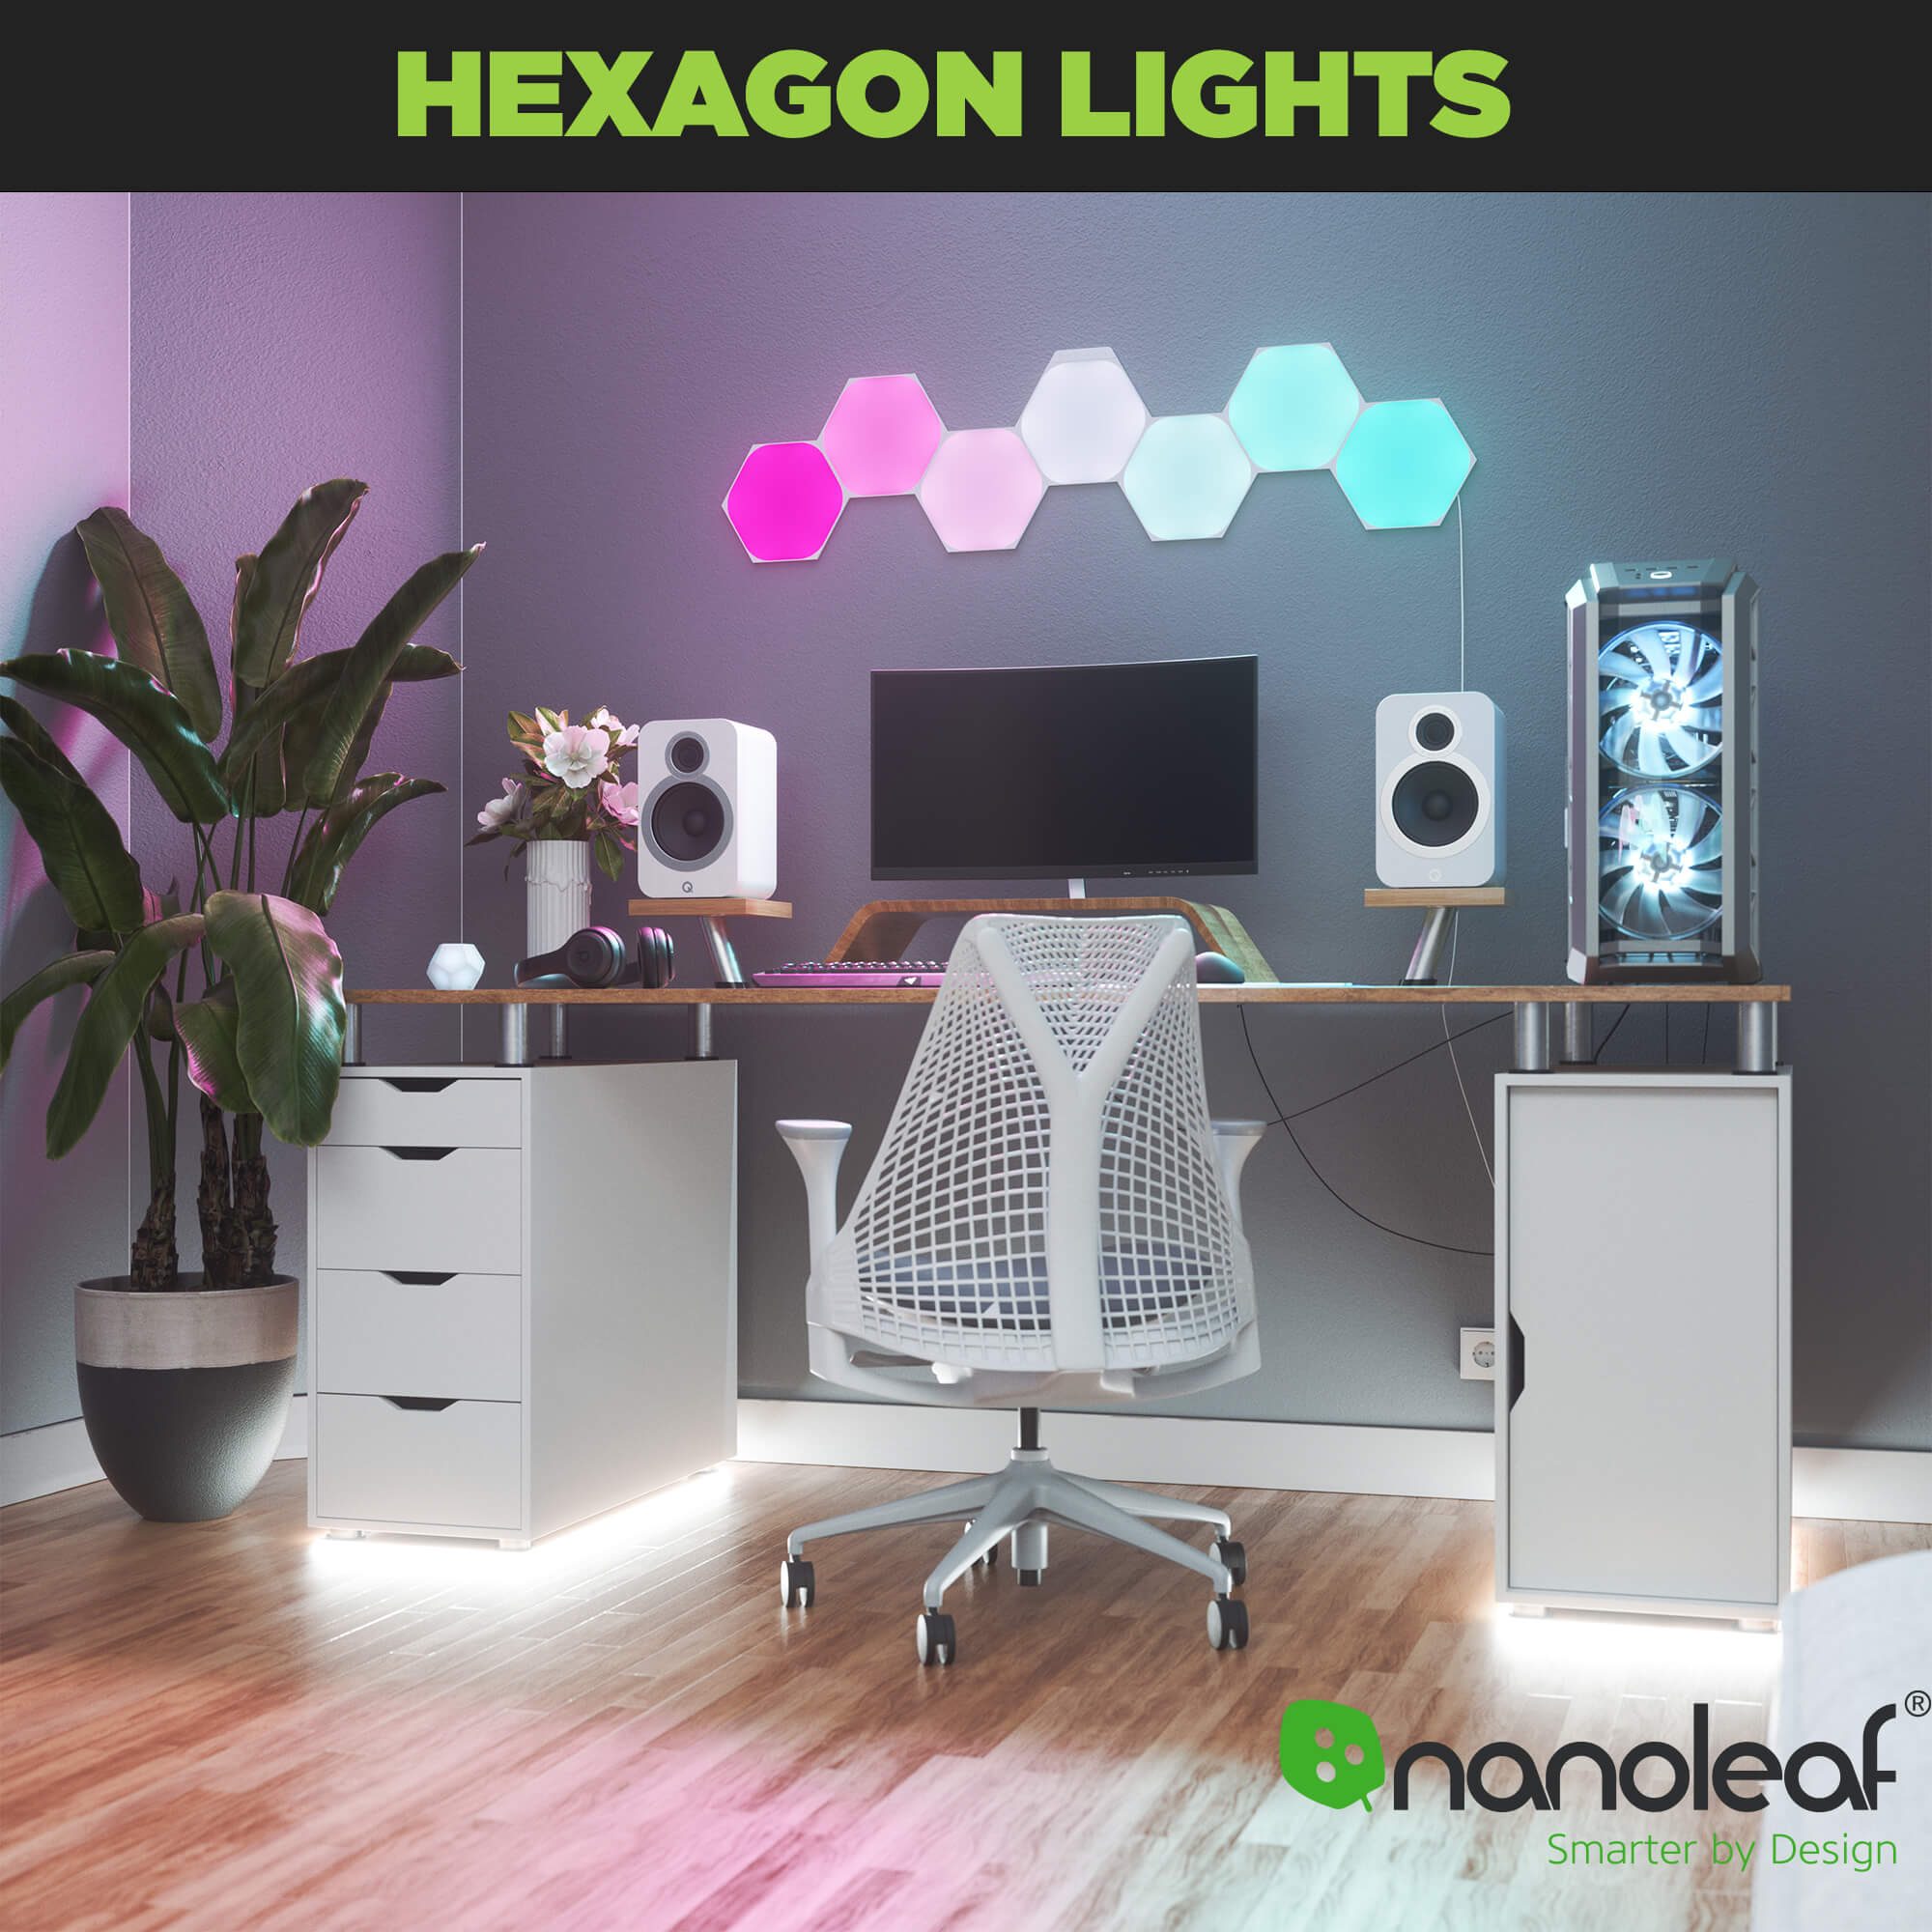 Nanoleaf hexagon lights wall mounted above gaming desk.